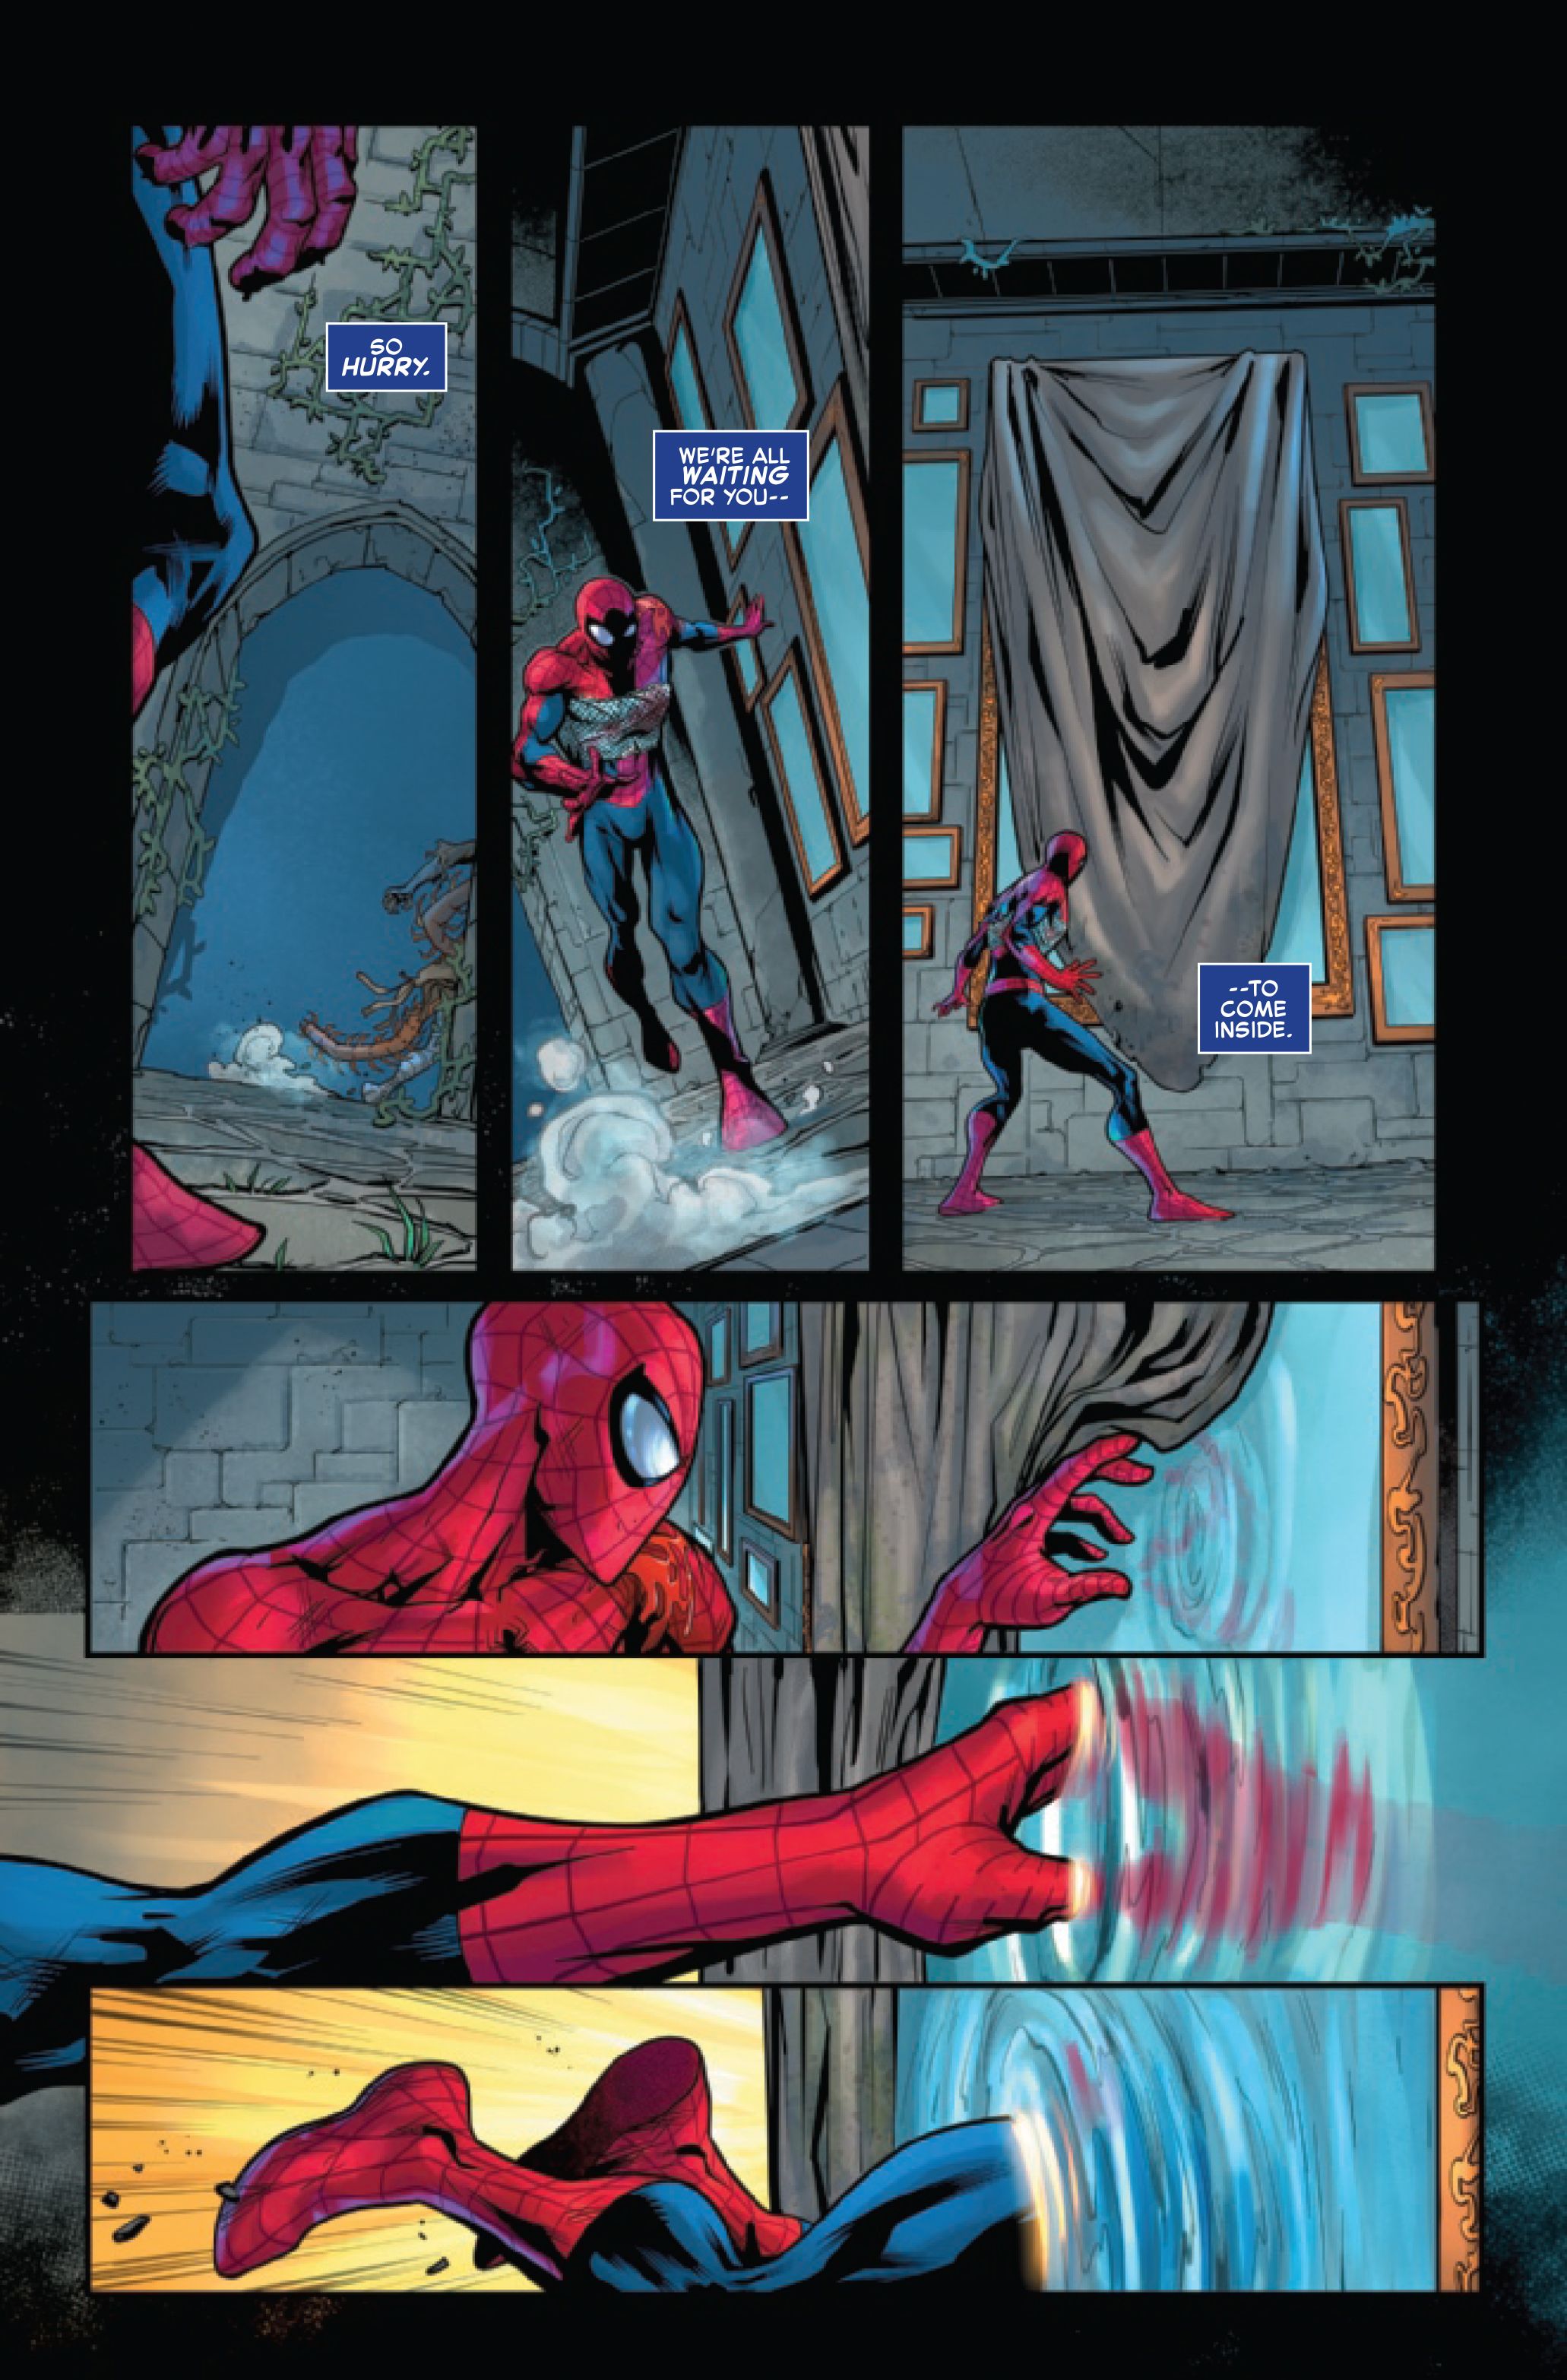 Page 3 of Amazing Spider-Man #73, by Nick Spencer, Zé Carlos, Carlos Gómez and Marcelo Ferreira.